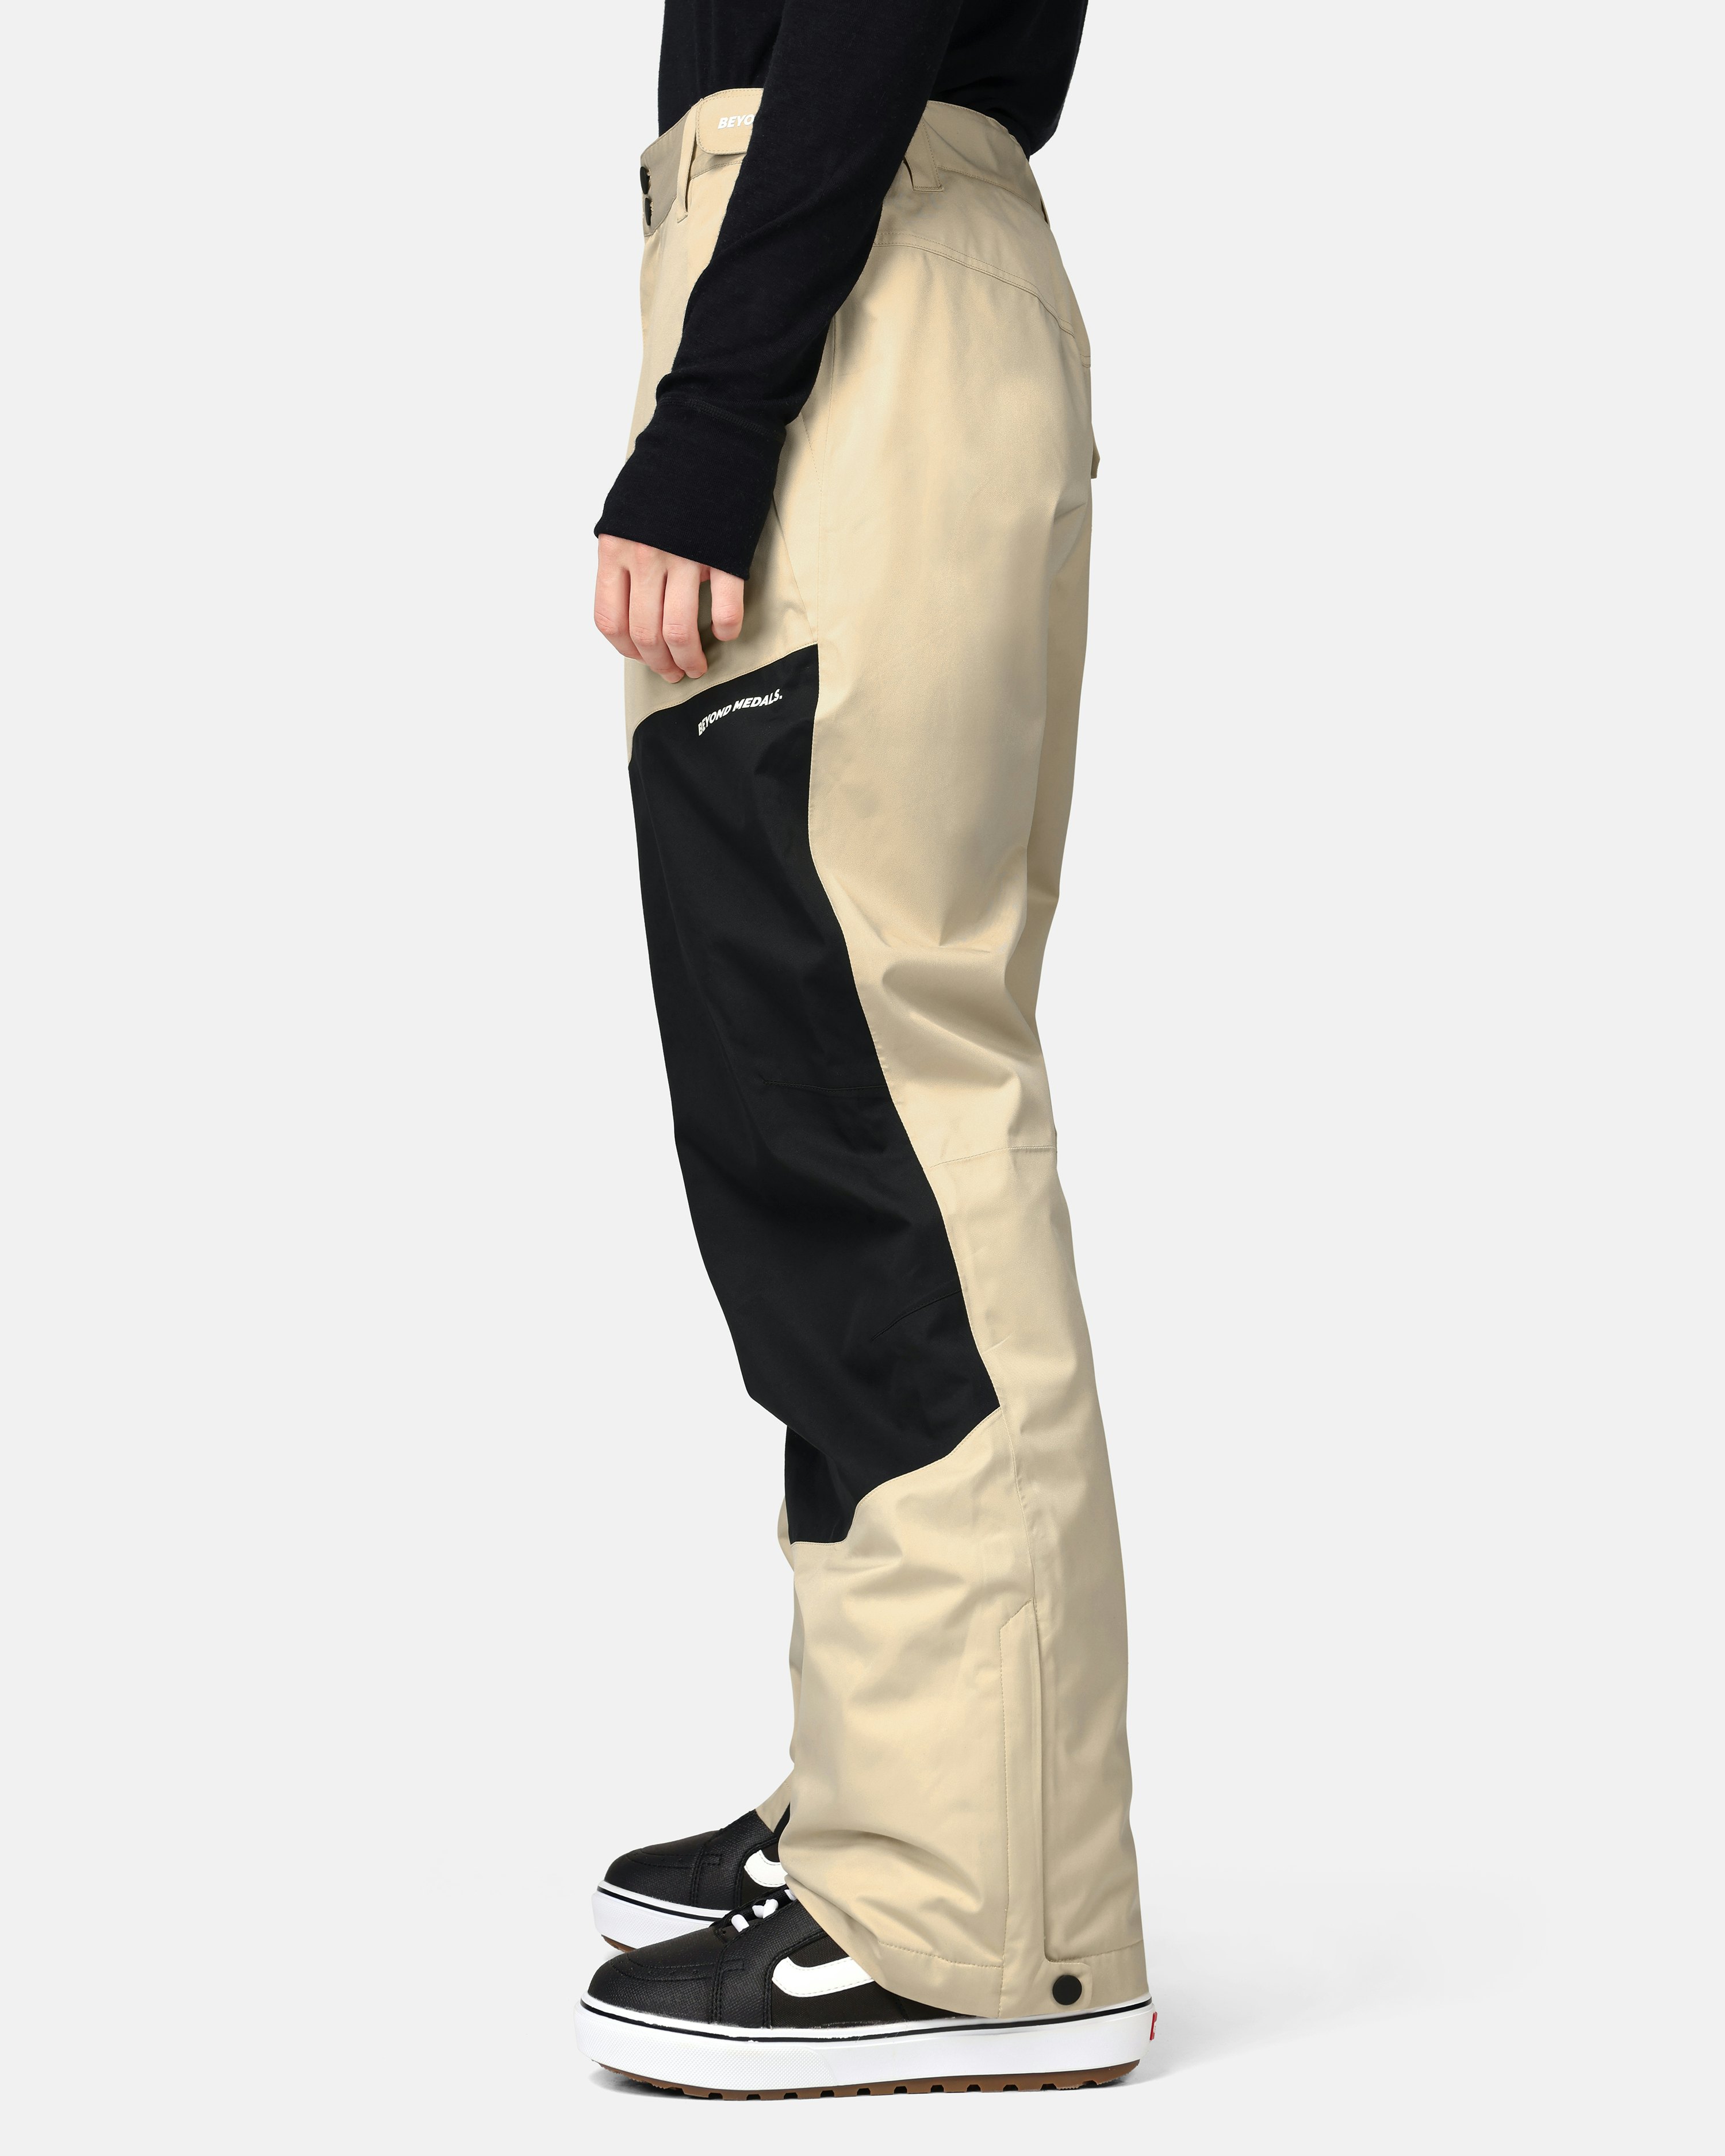 BEYOND MEDALS Pants - ZIP Light brown | Unisex | Junkyard